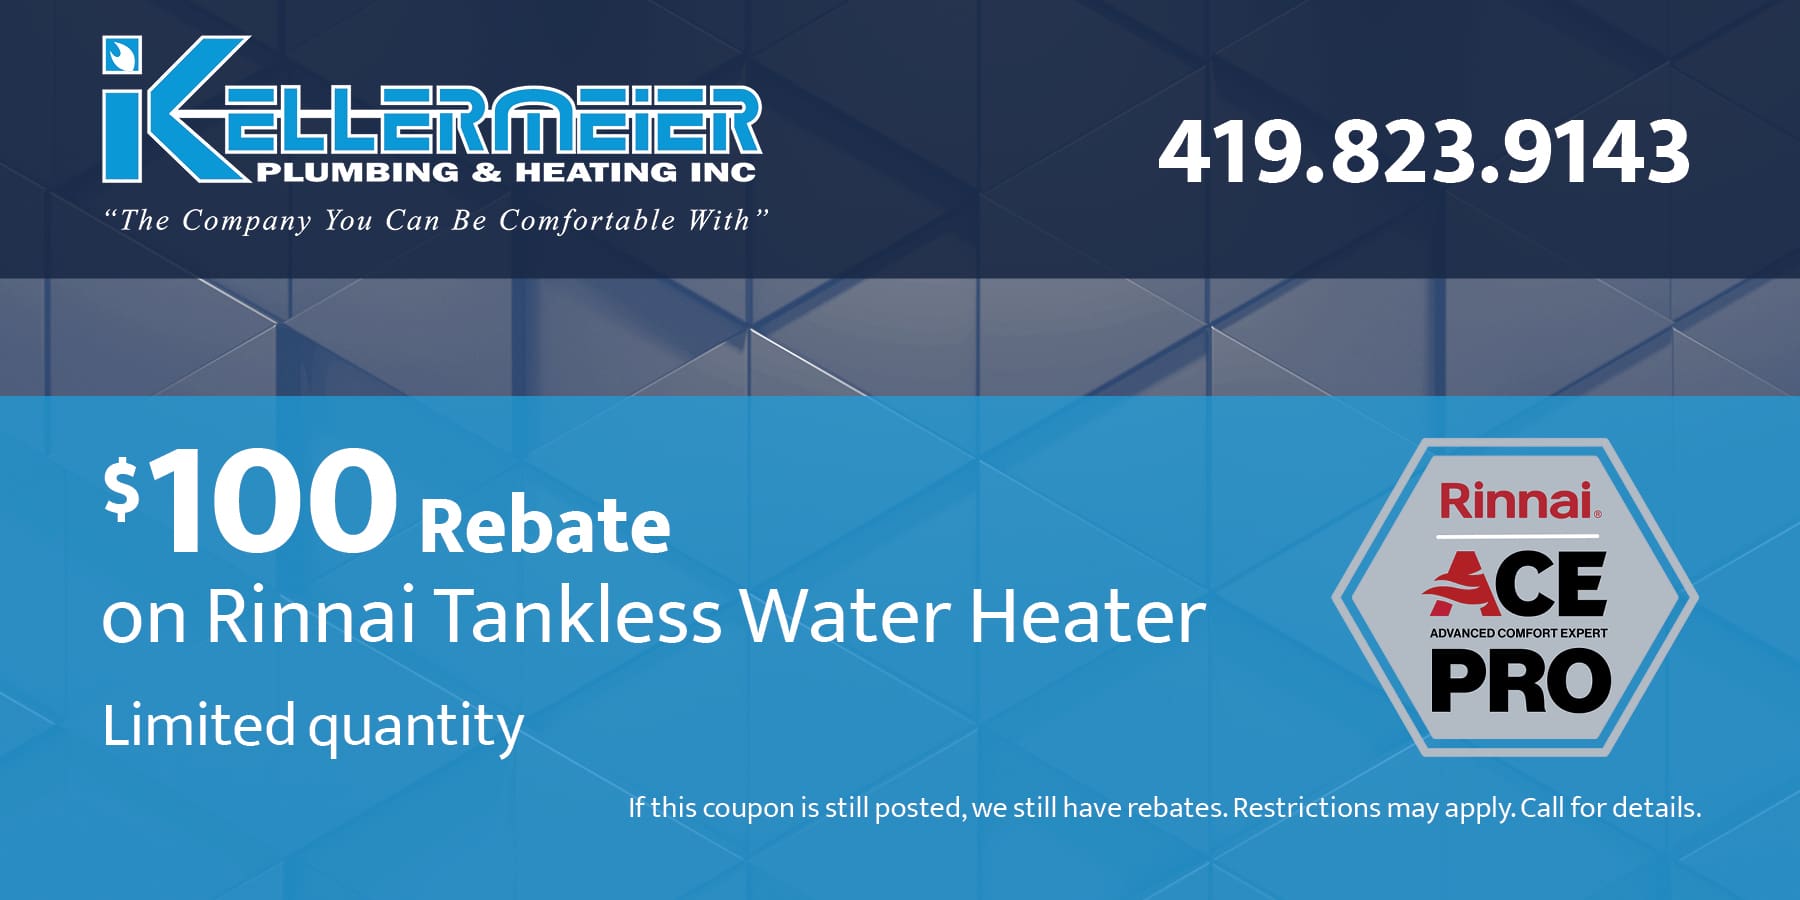 $100 rebate on Rinnai Tankless Water Heater